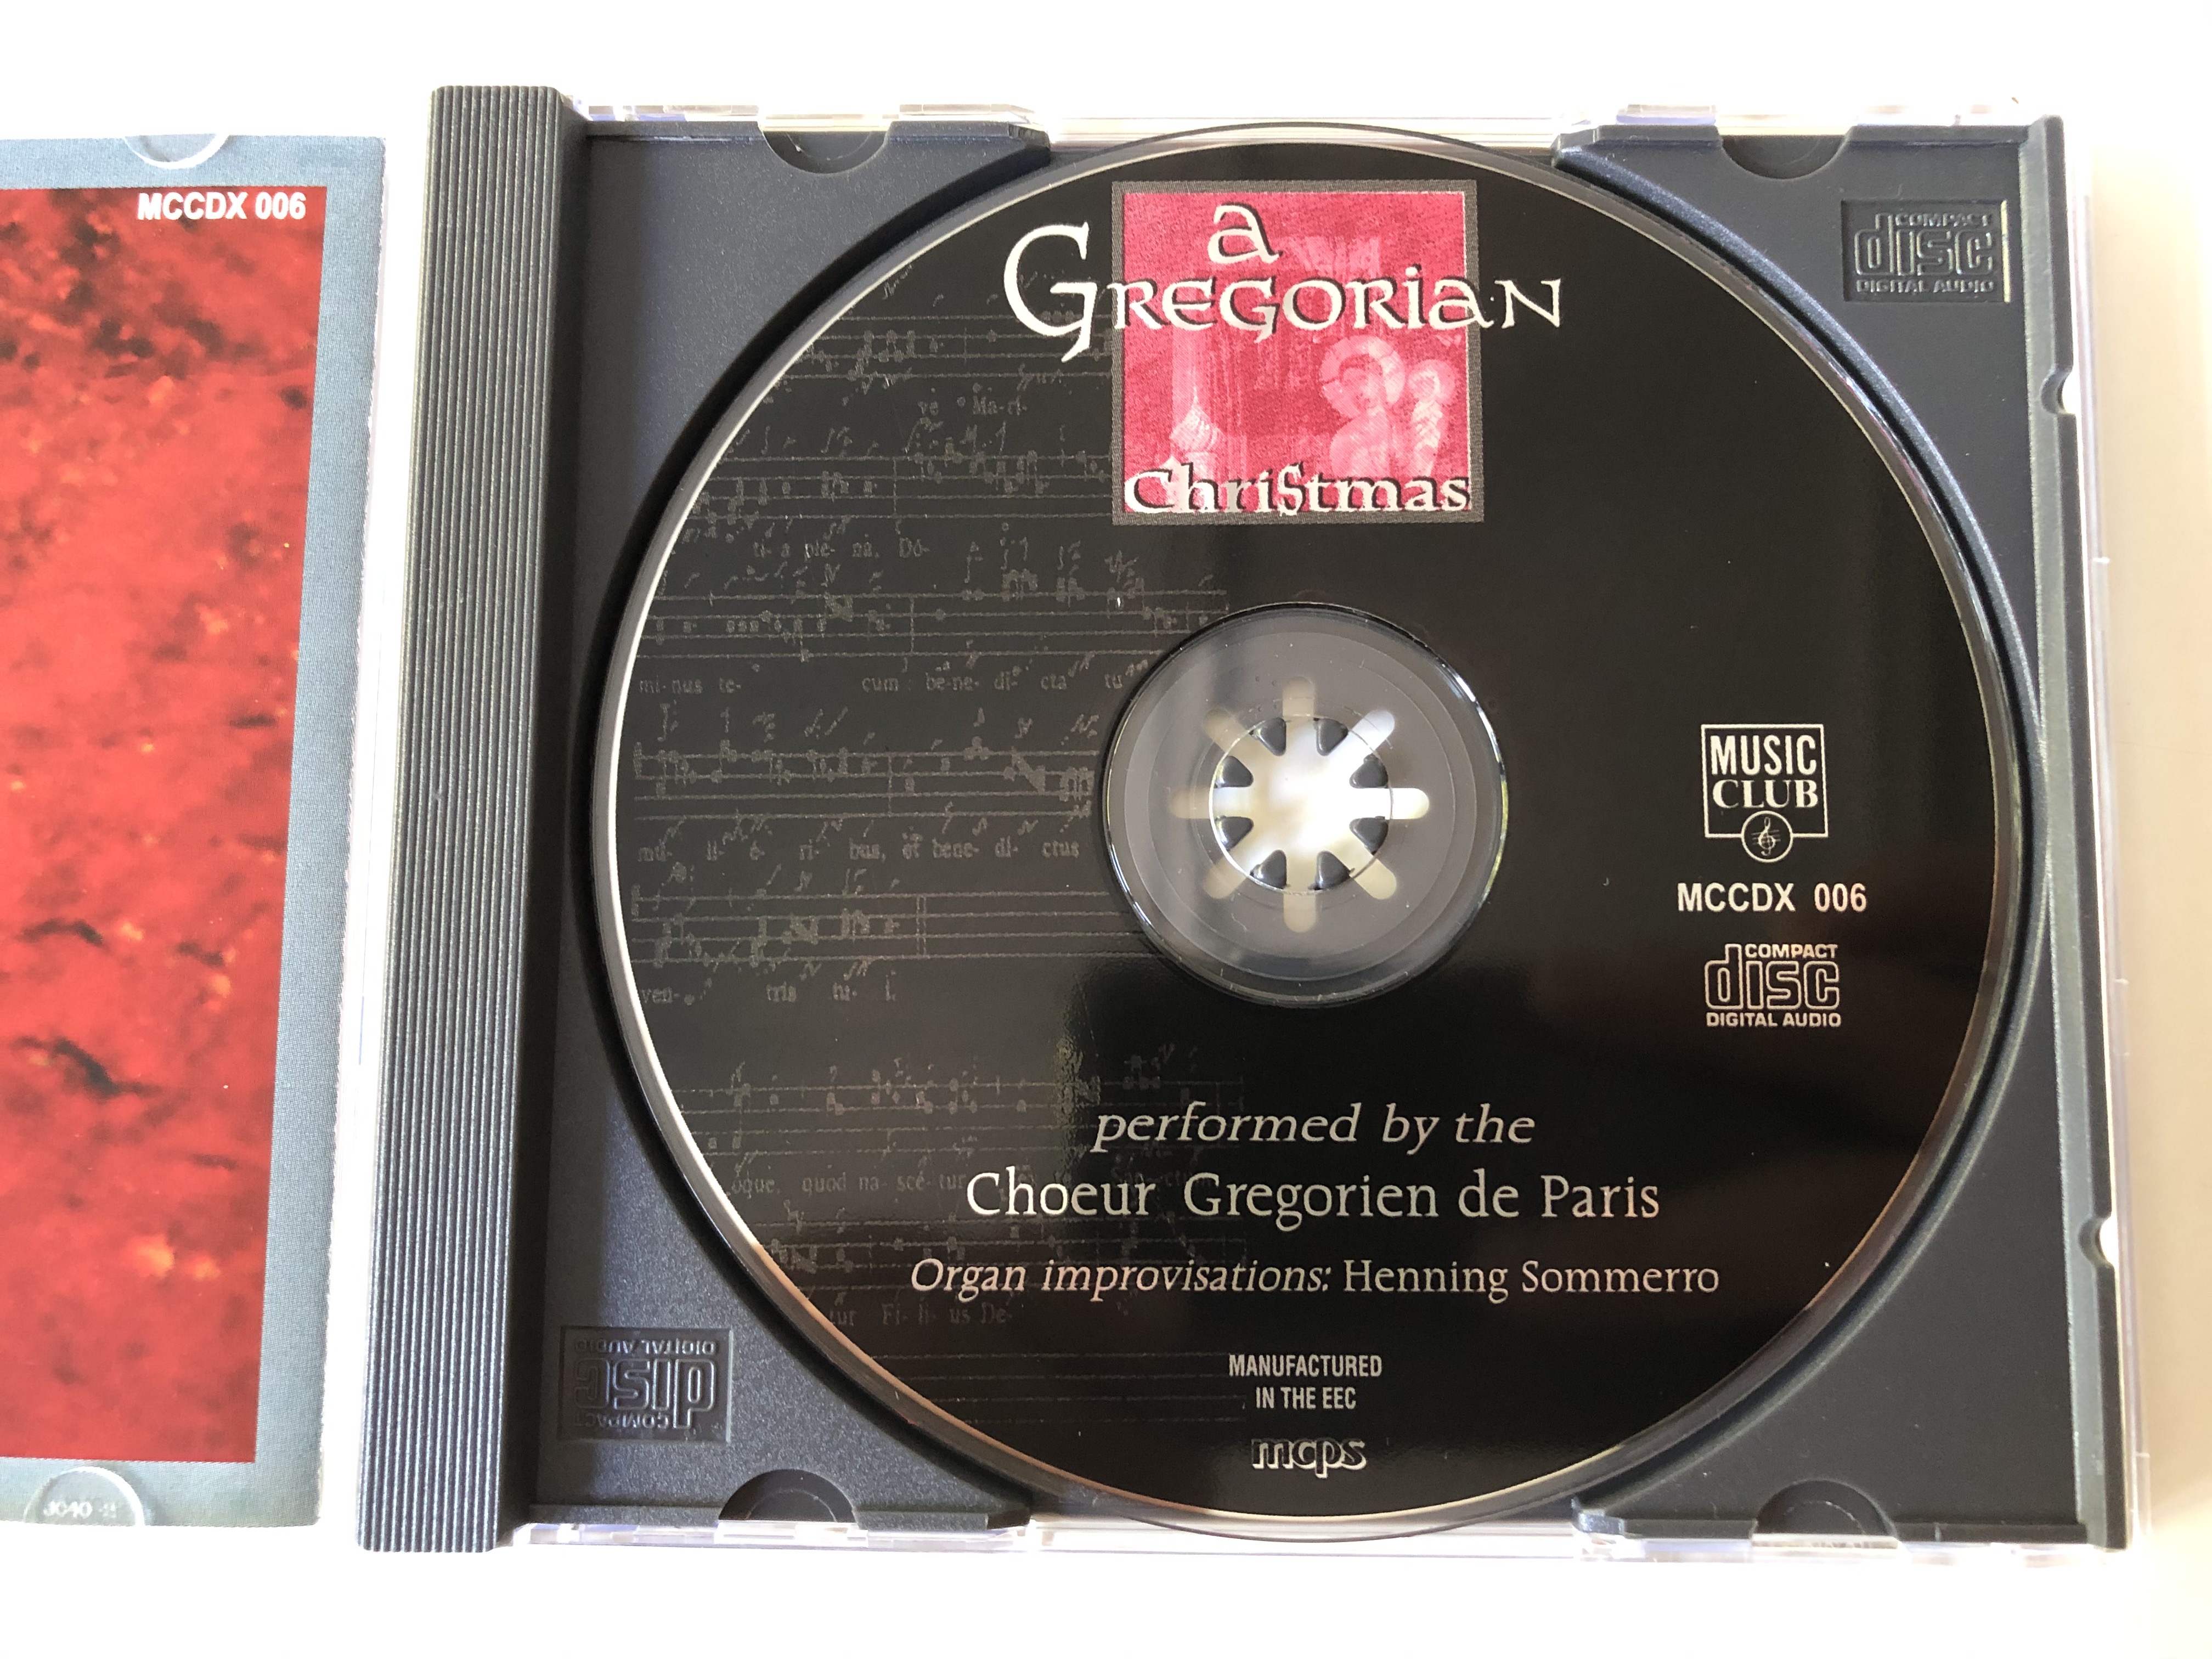 a-gregorian-christmas-a-collection-of-seasonal-gregorian-chants-performed-by-the-choeur-gr-gorien-de-paris-organ-improvisations-henning-sommerro-music-club-audio-cd-1989-mccdx-006-4-.jpg